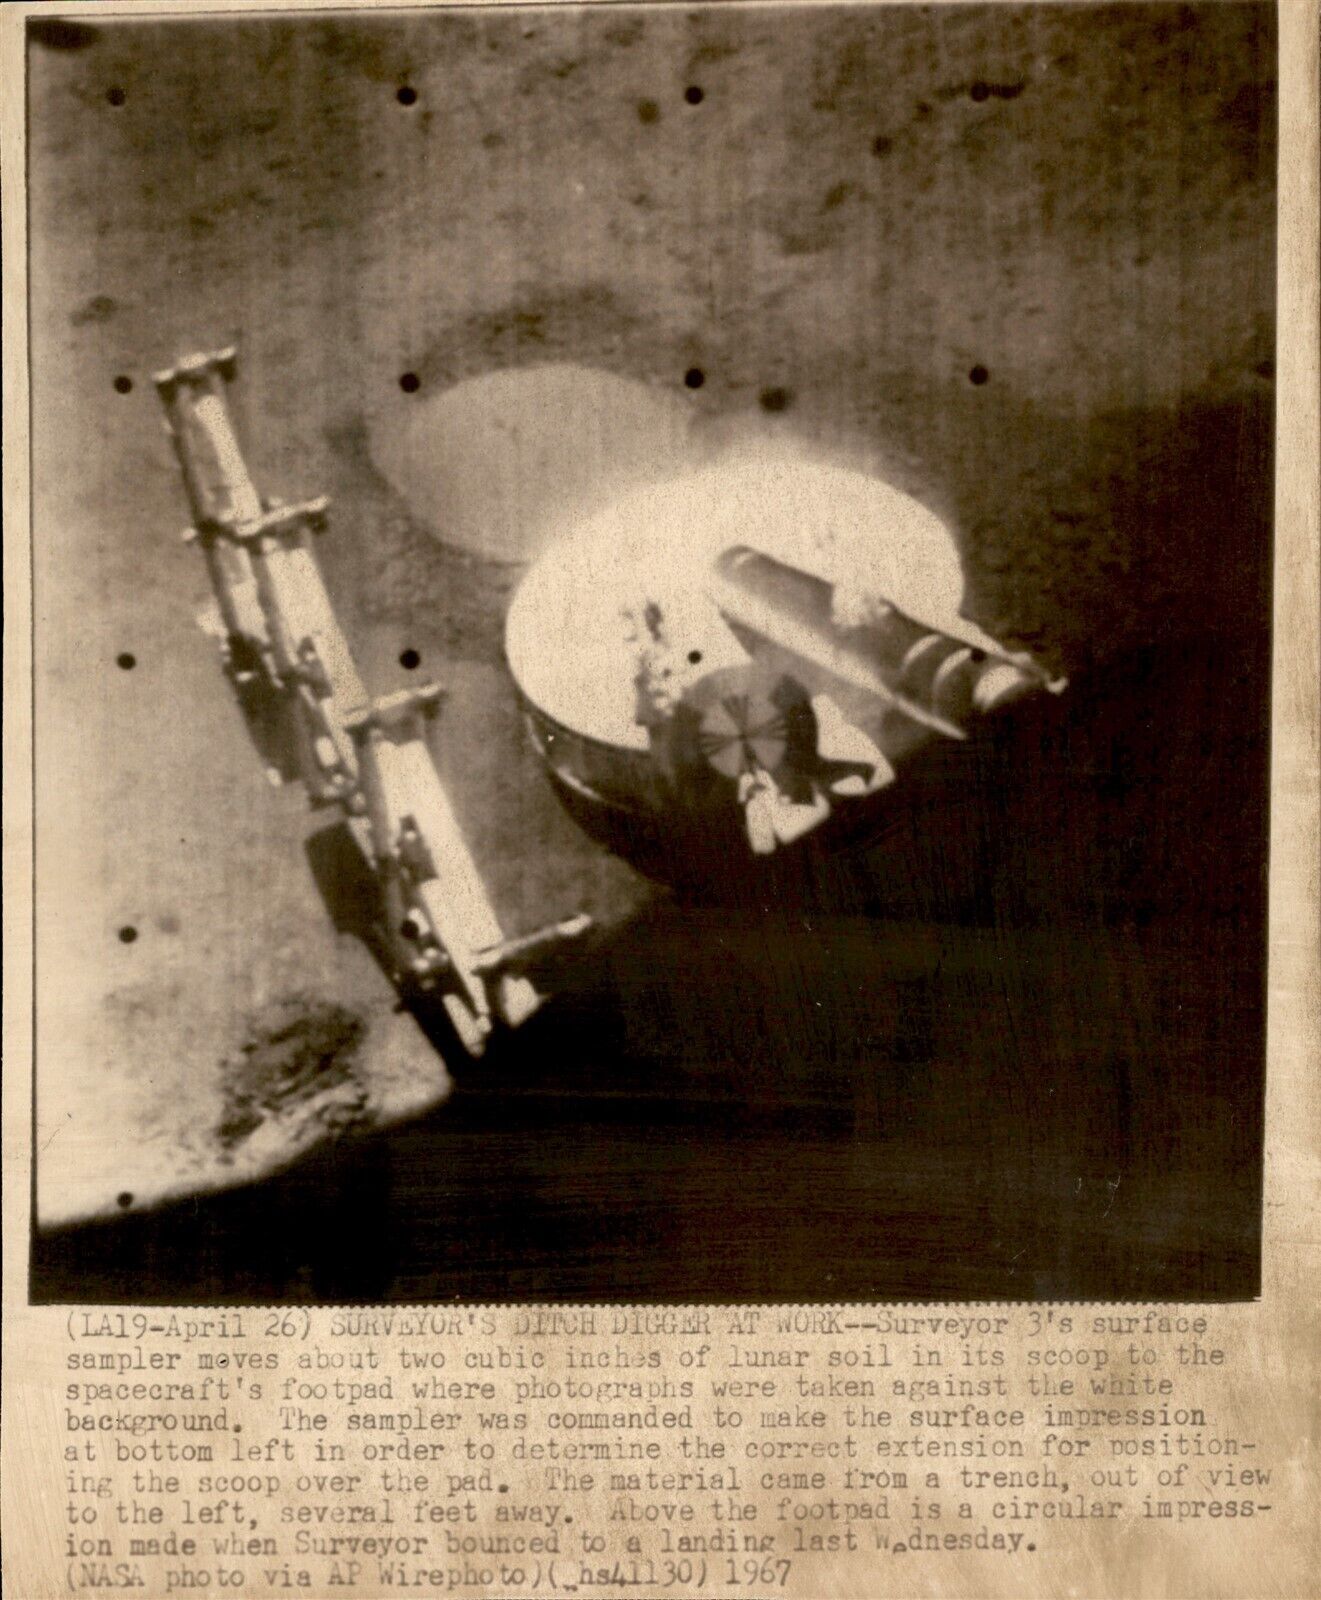 LD319 1967 NASA AP Wire Photo SURVEYOR 3 SPACECRAFT DITCH DIGGER LUNAR SOIL